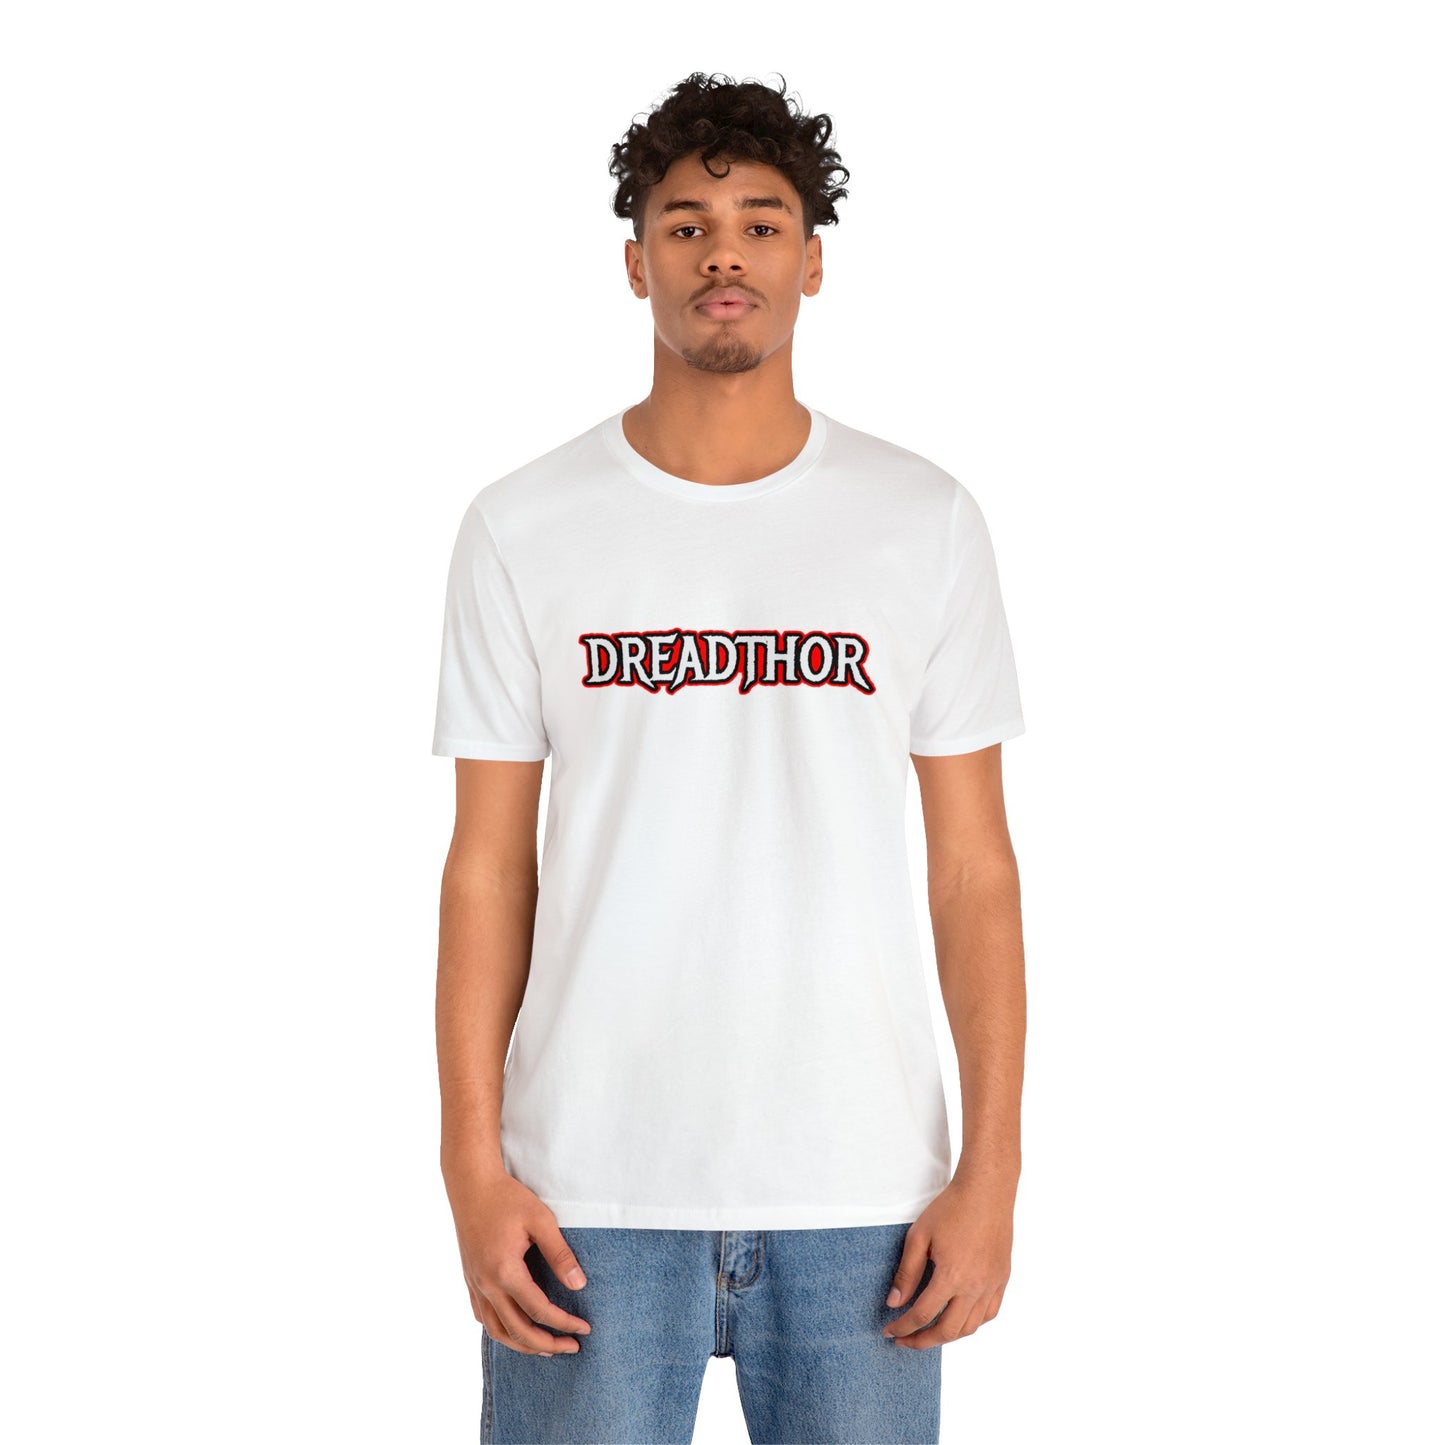 DreadThor Unisex T-shirt